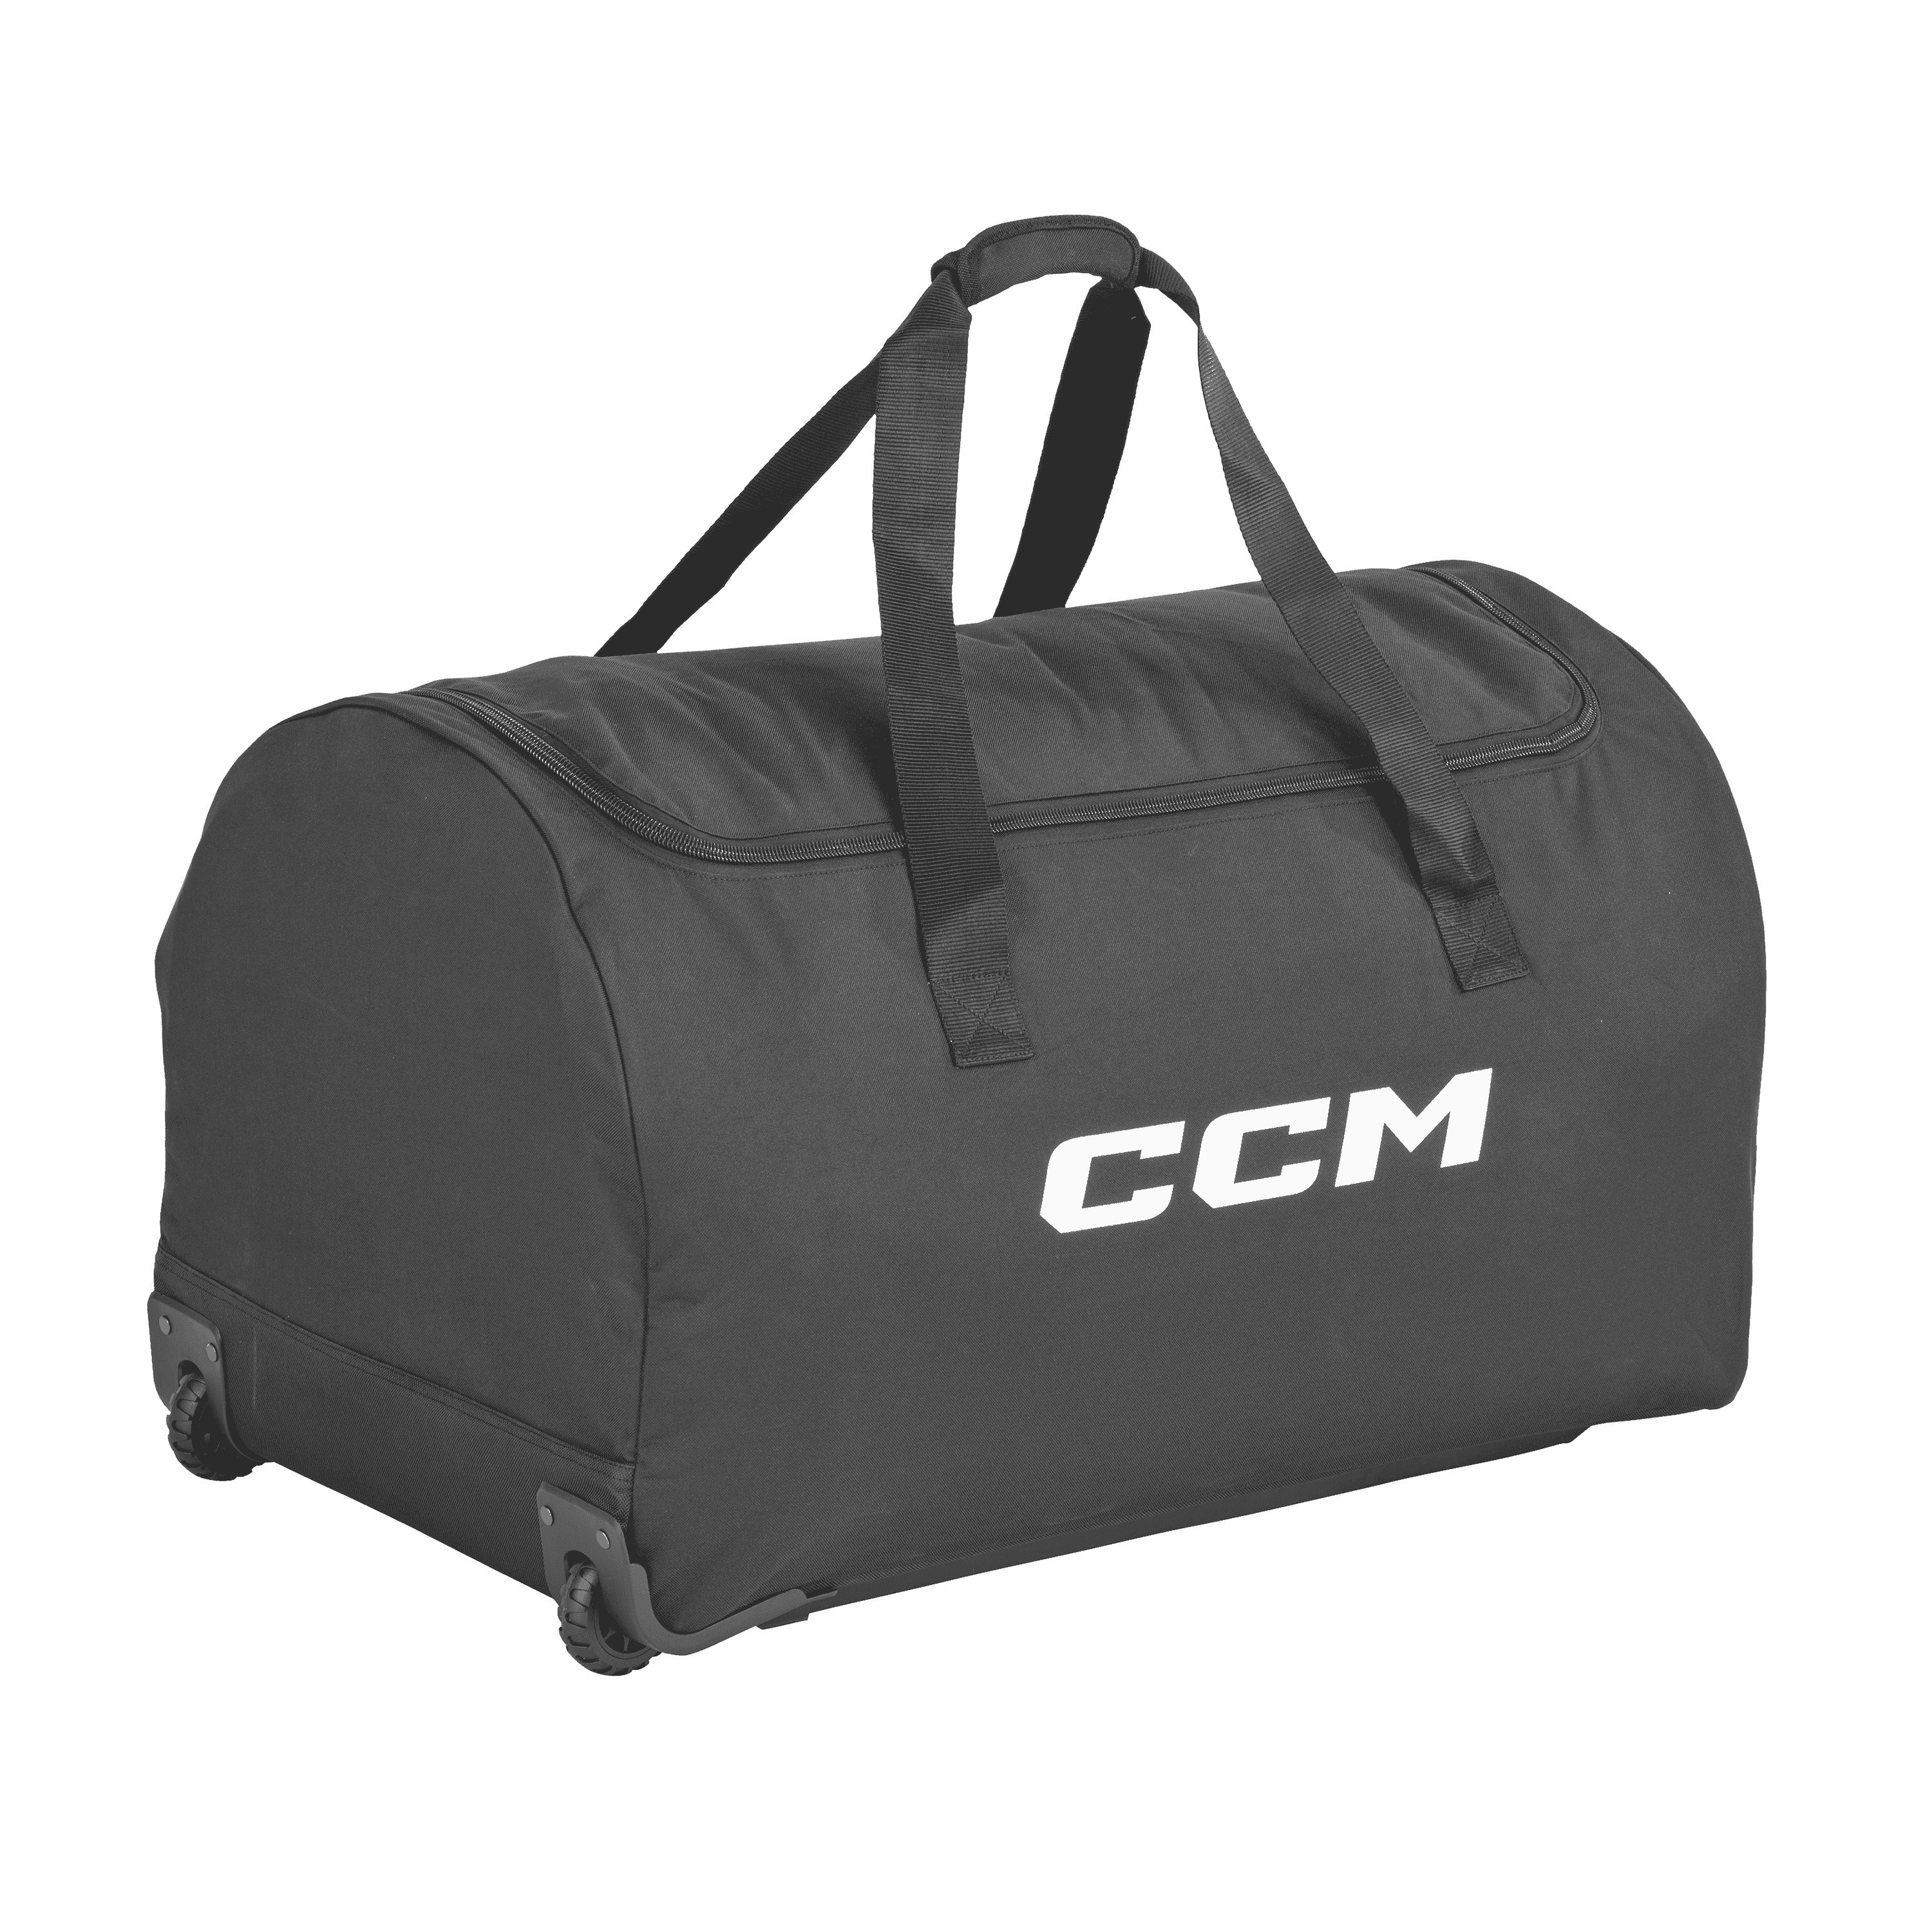 Tasche CCM 420 Player Basic Wheeled Bag SR 36"L x 20"H x 20" W